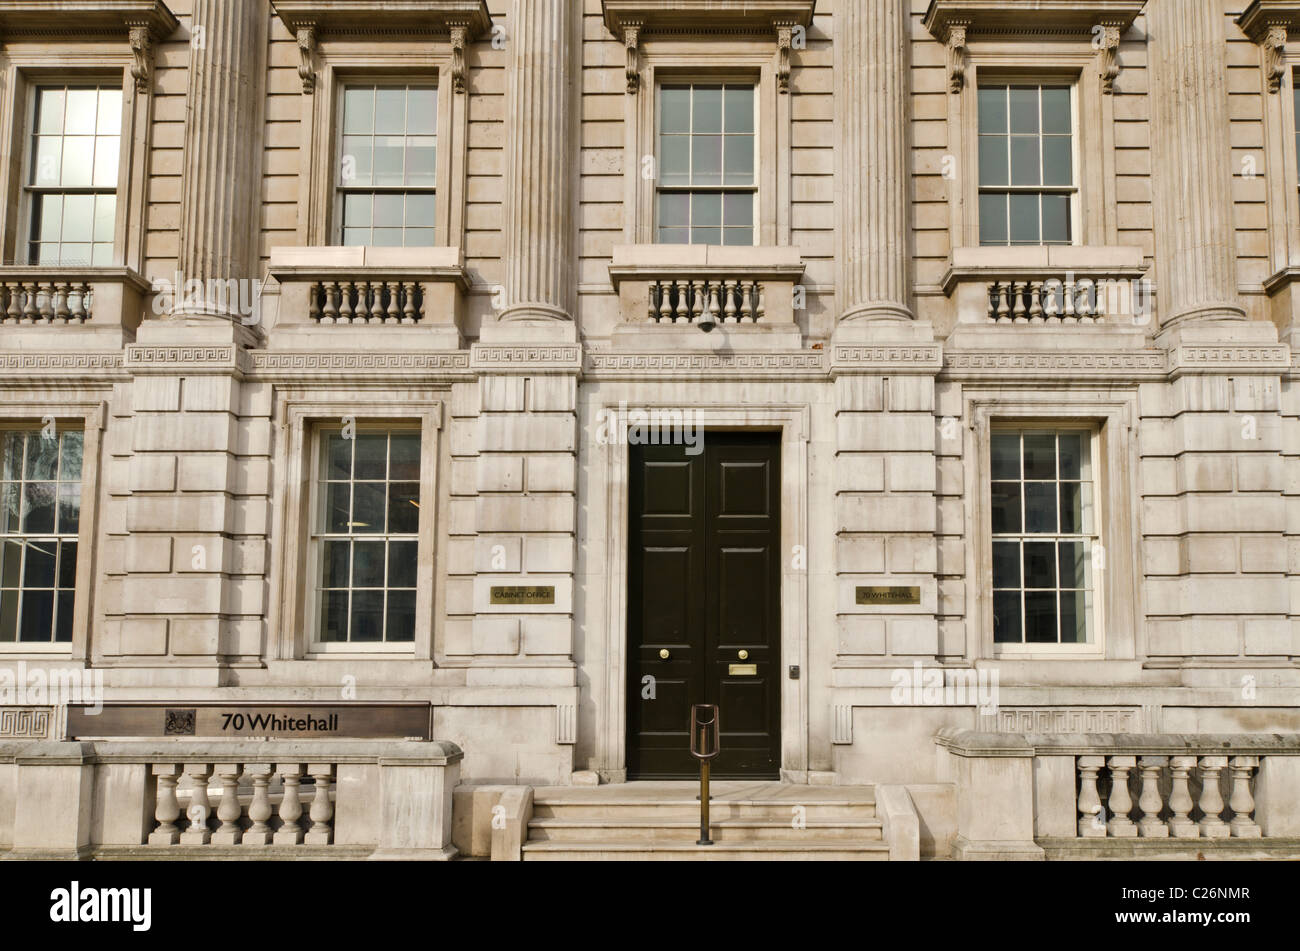 The Cabinet Office entrance 70 Whitehall, London Uk Stock Photo